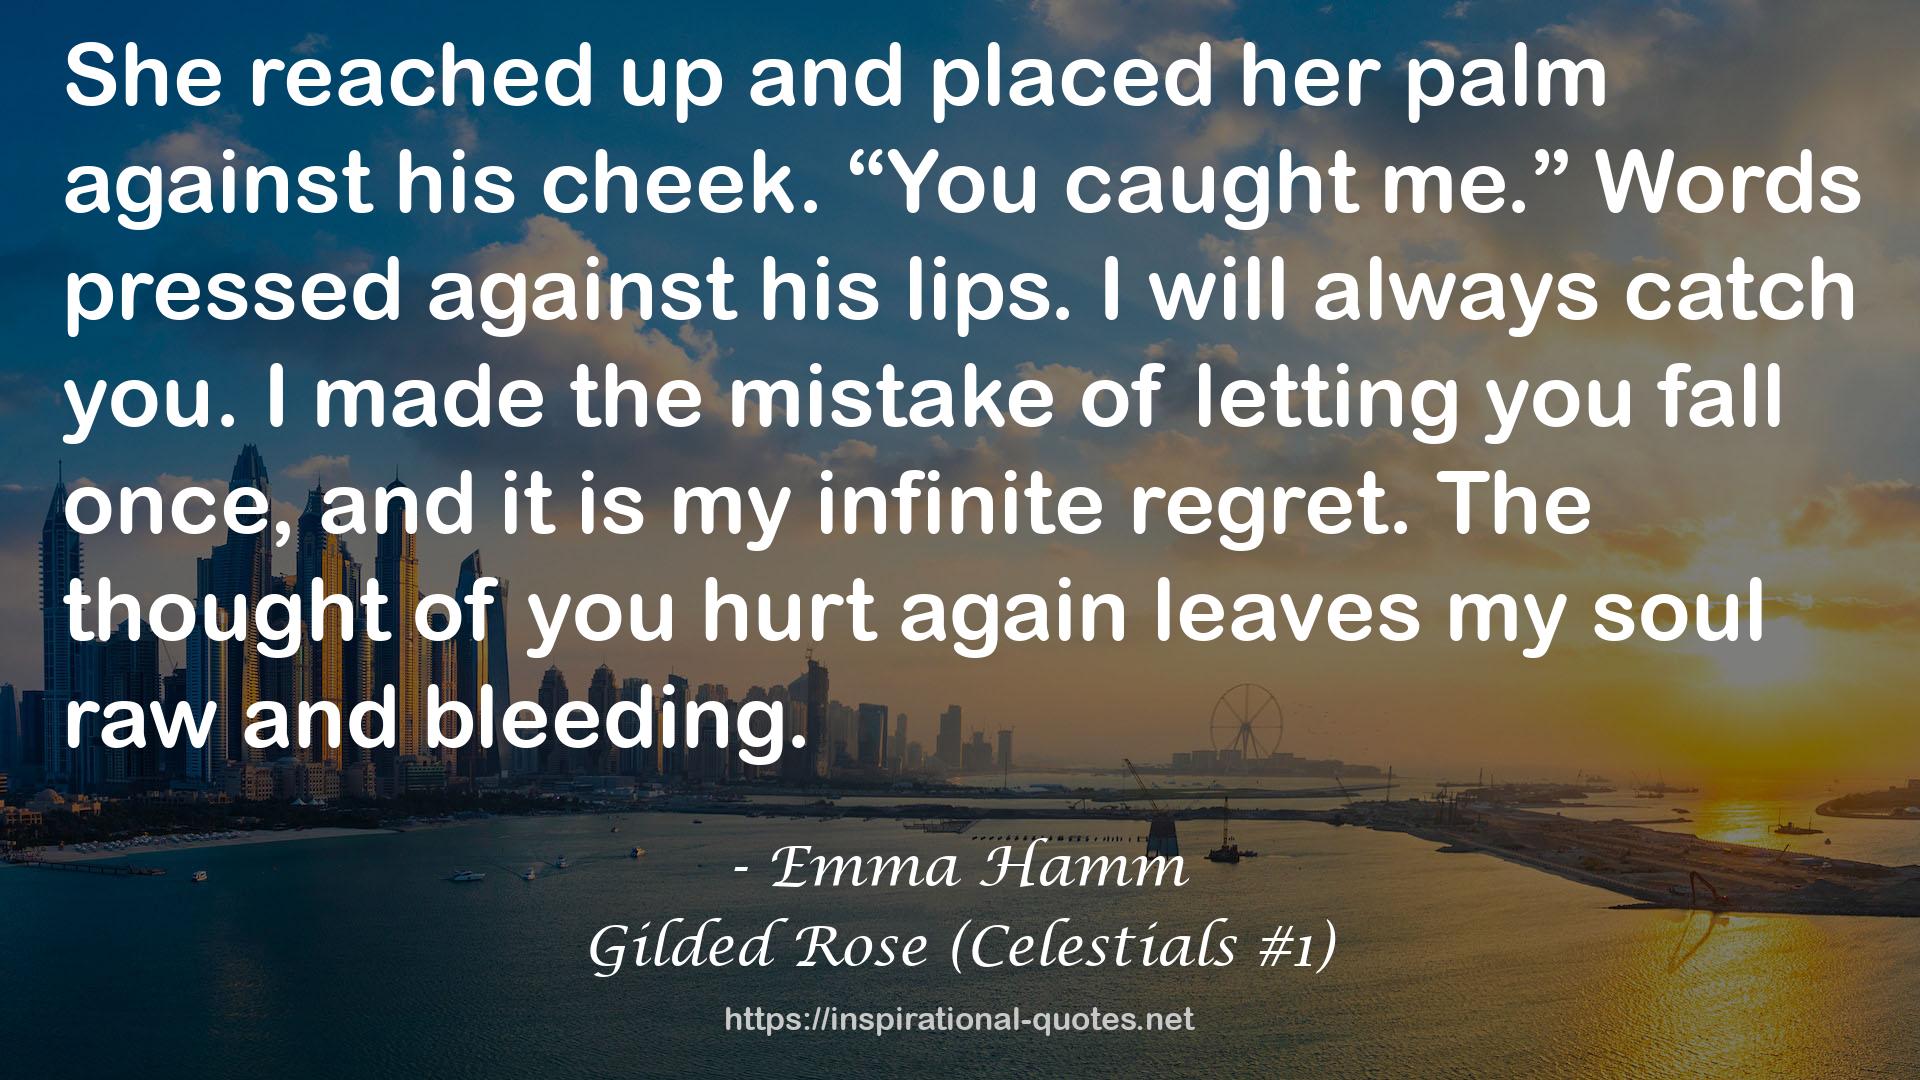 Gilded Rose (Celestials #1) QUOTES